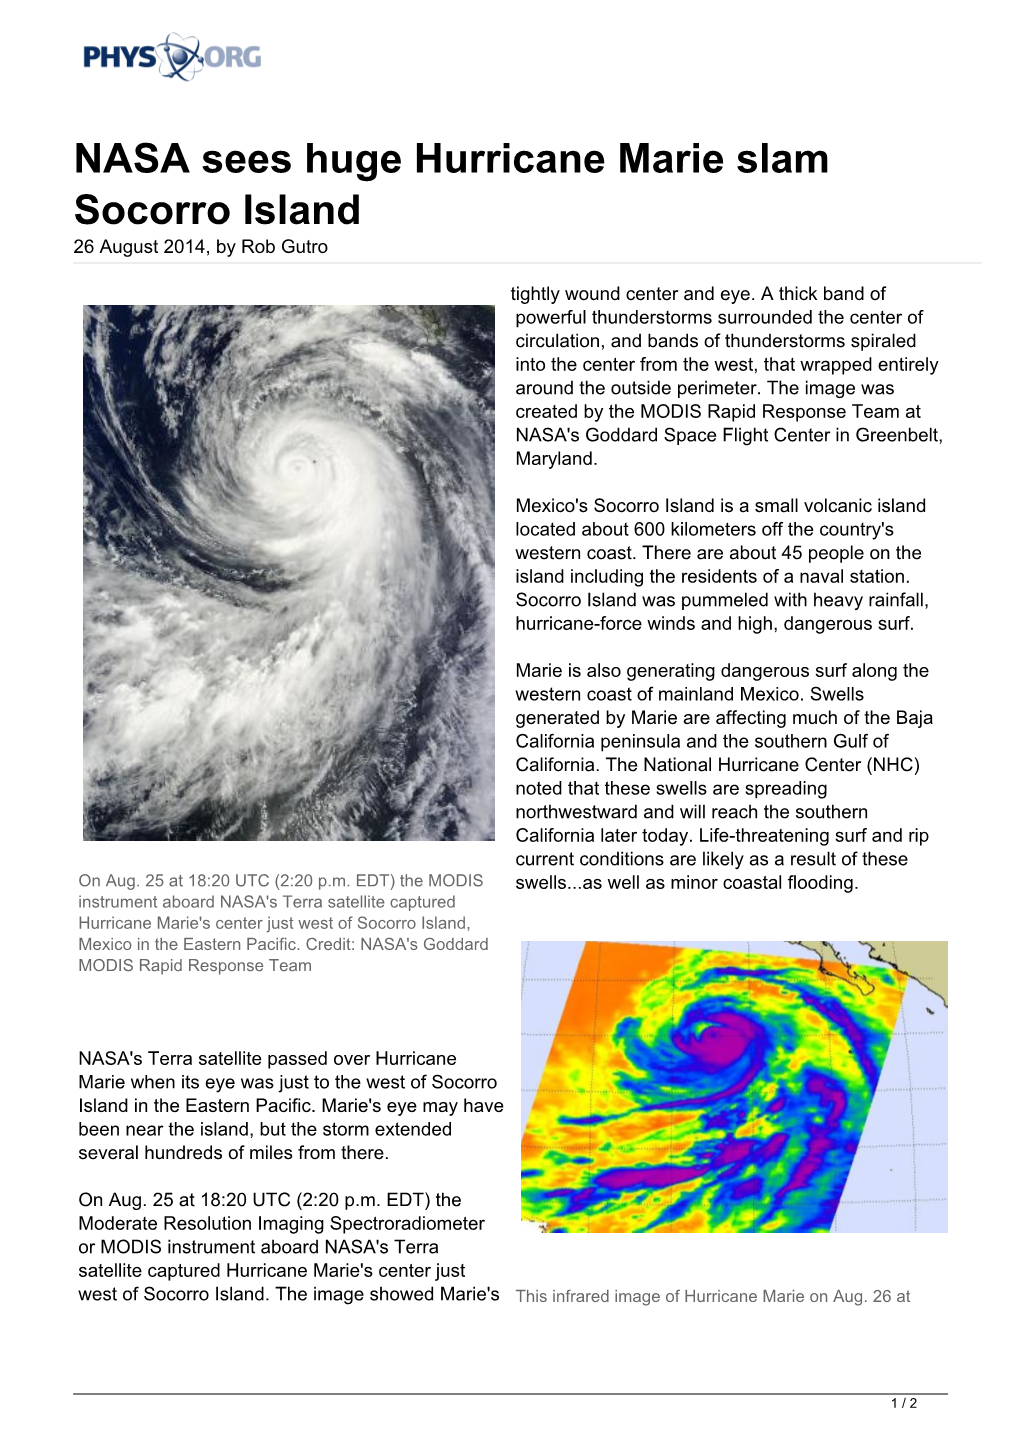 NASA Sees Huge Hurricane Marie Slam Socorro Island 26 August 2014, by Rob Gutro